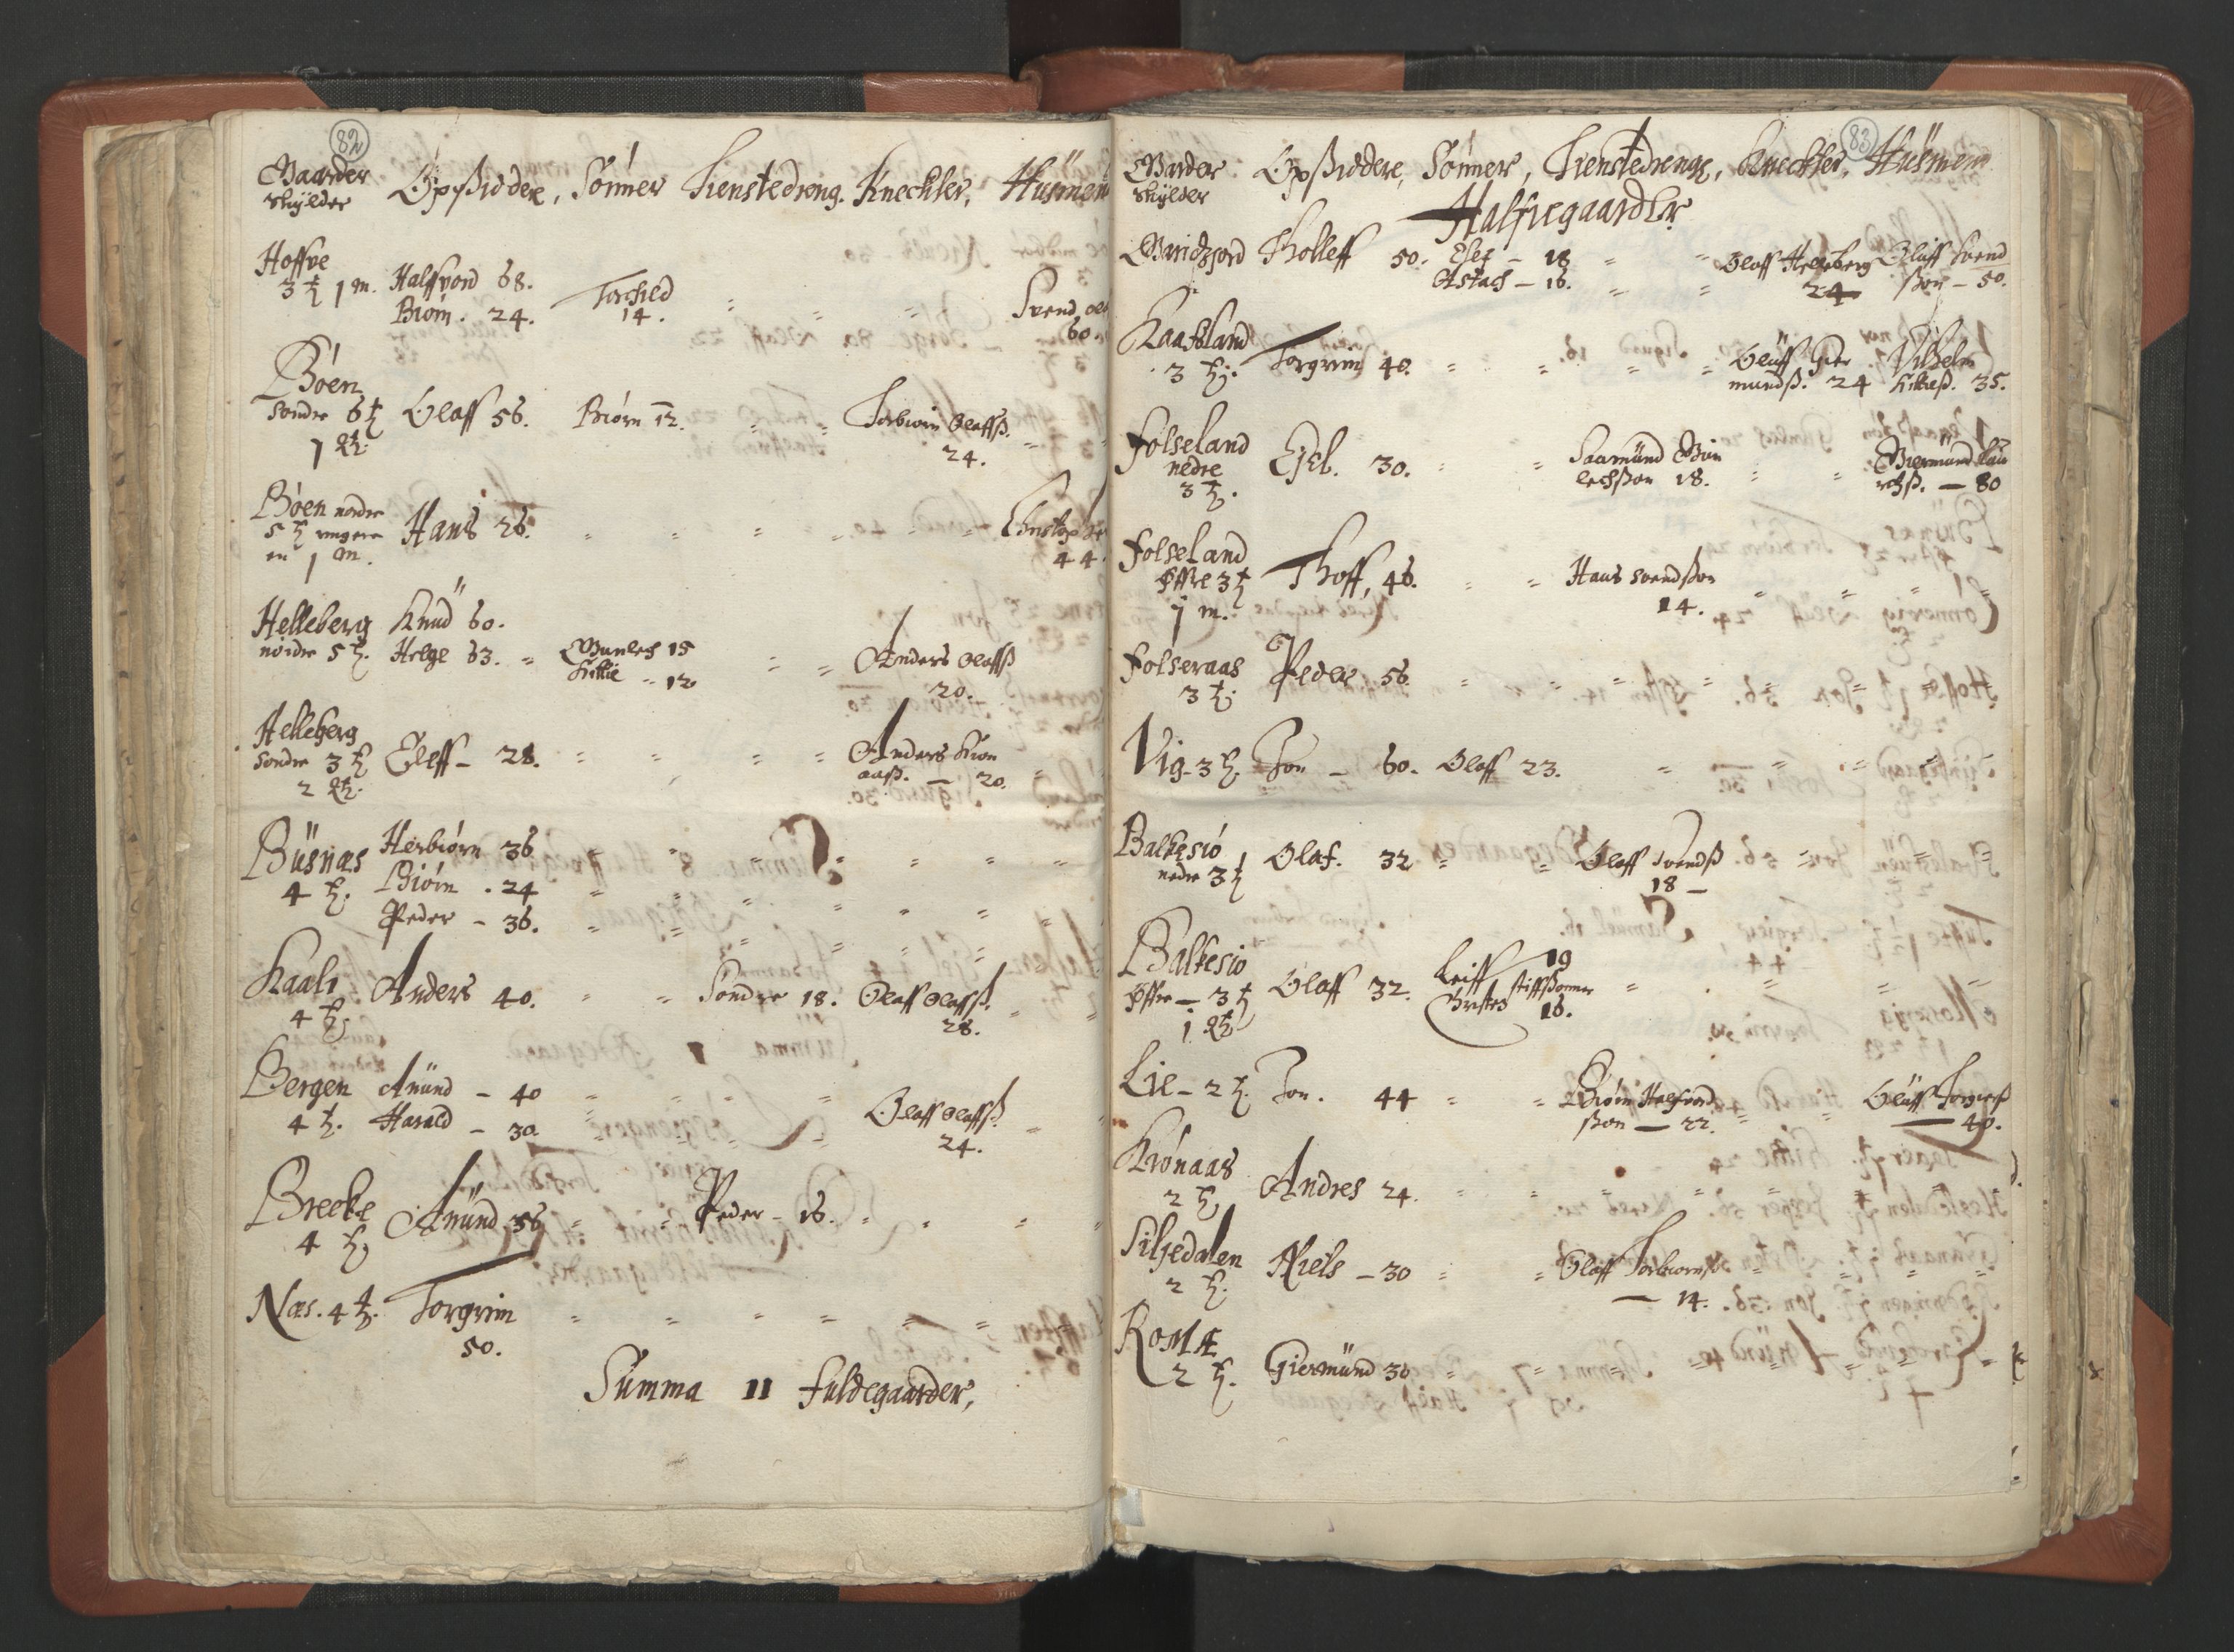 RA, Vicar's Census 1664-1666, no. 12: Øvre Telemark deanery, Nedre Telemark deanery and Bamble deanery, 1664-1666, p. 82-83